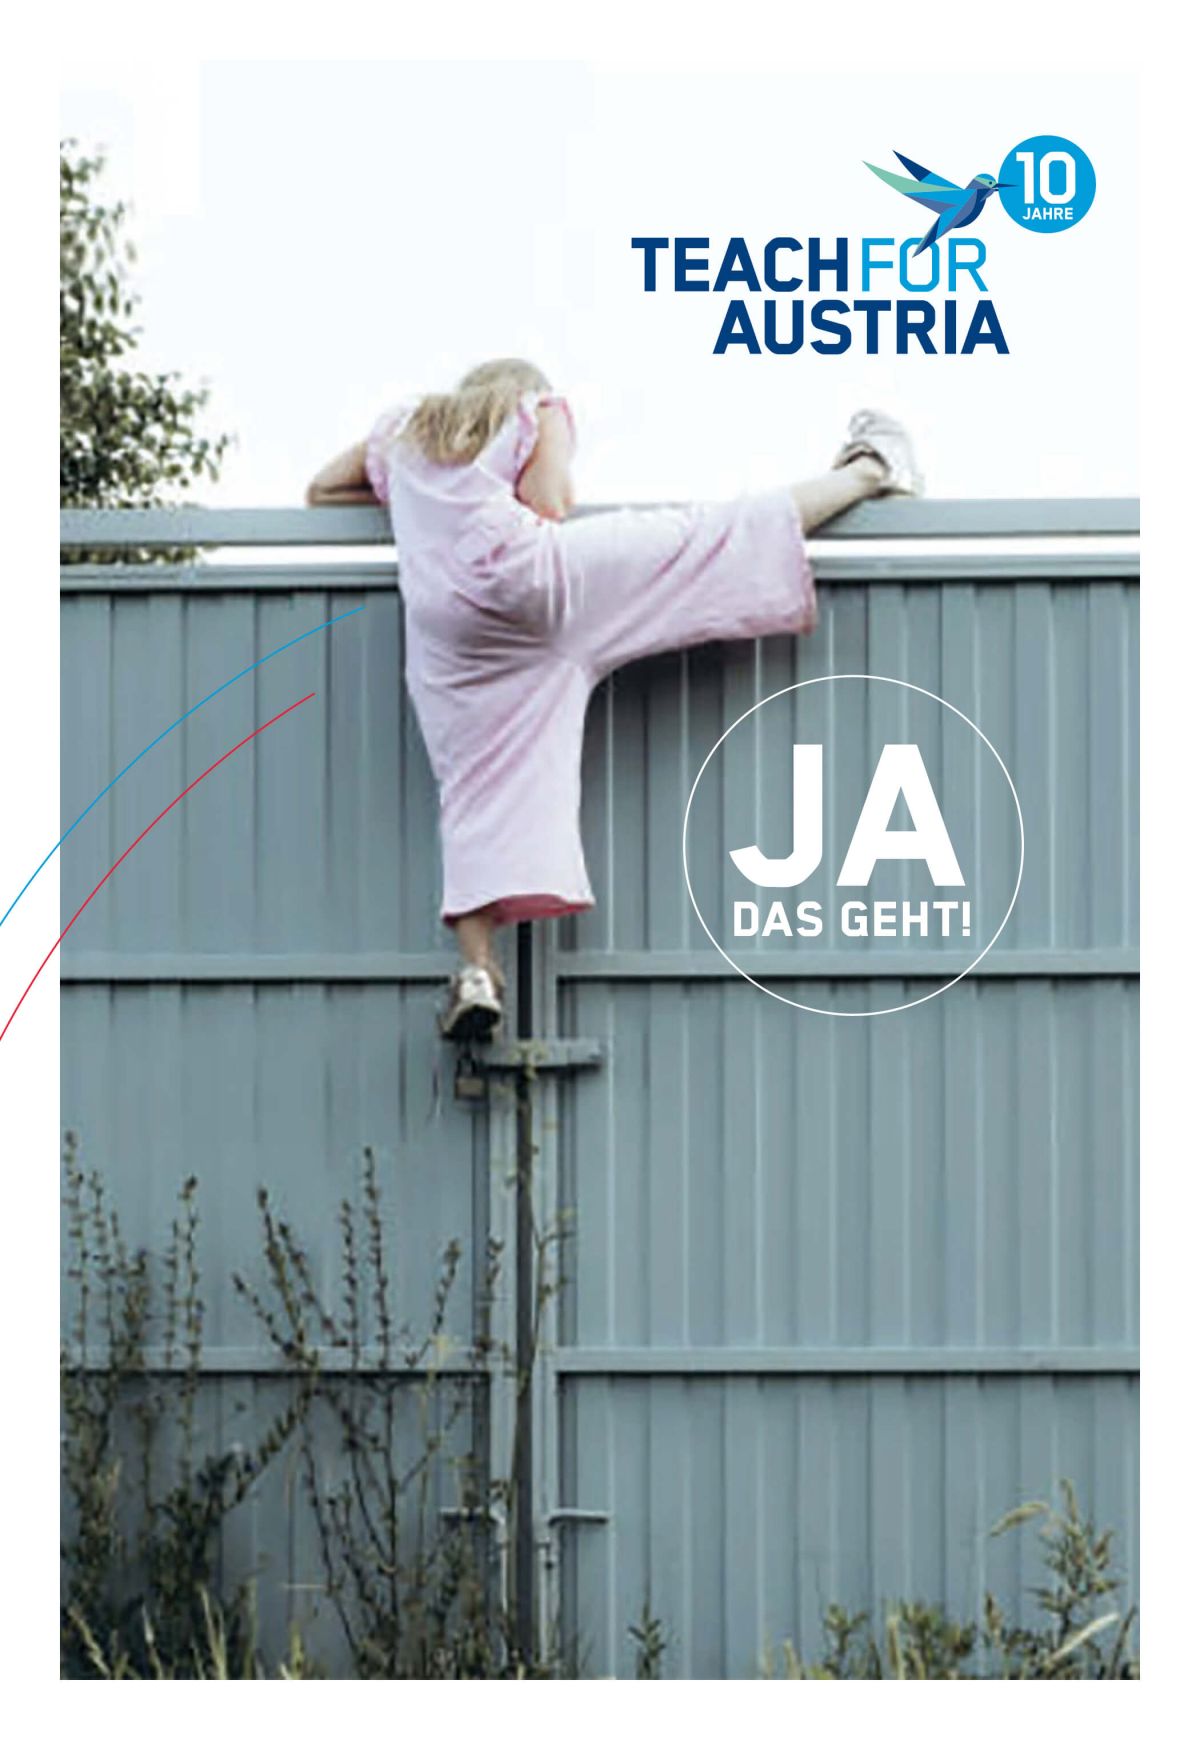 teach for austria 10 jahres-visual